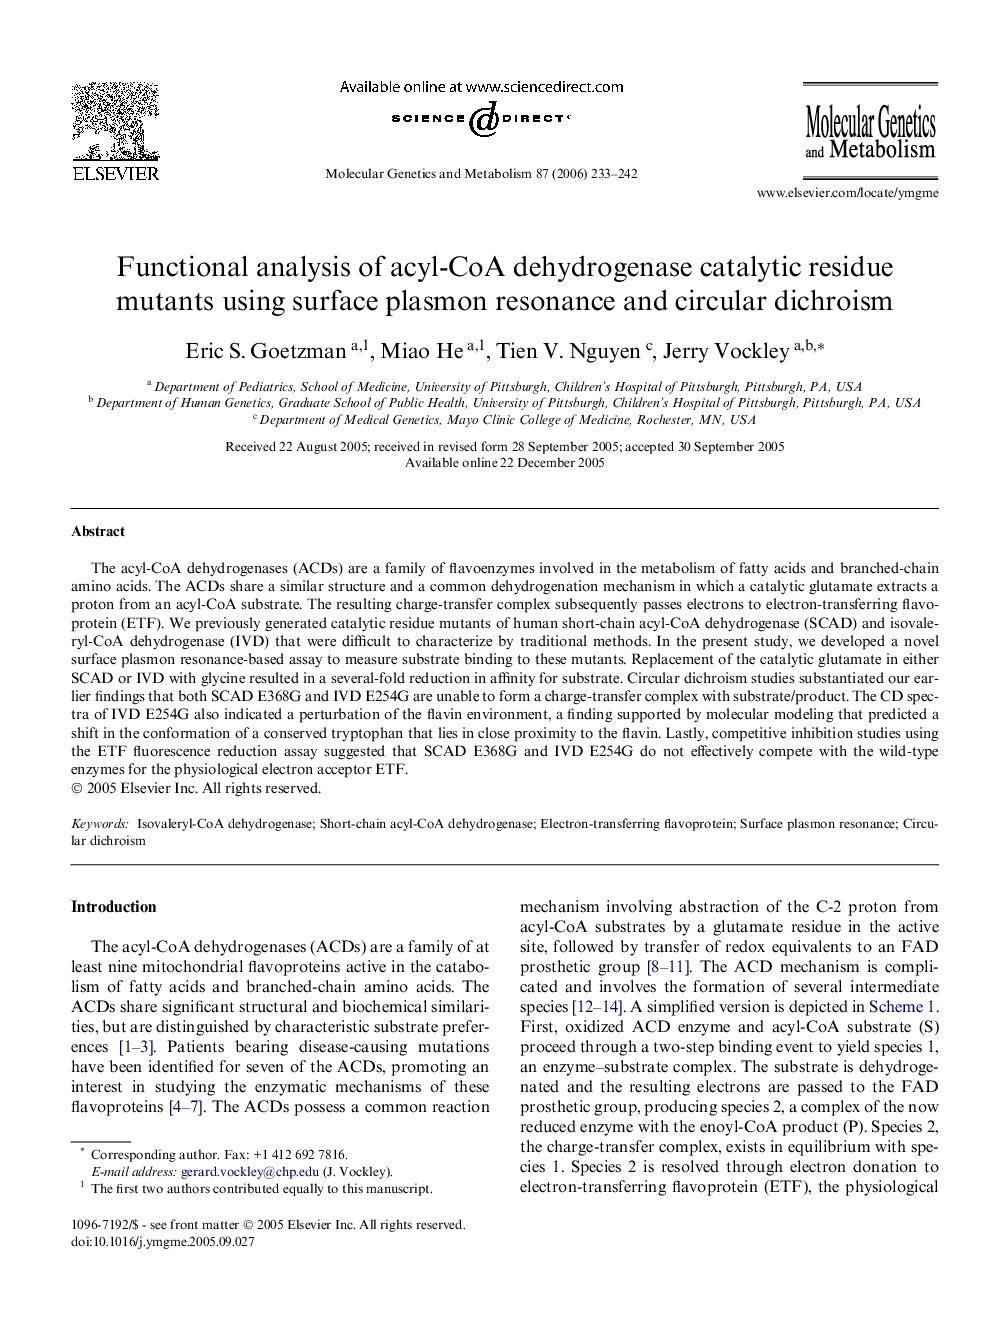 Functional analysis of acyl-CoA dehydrogenase catalytic residue mutants using surface plasmon resonance and circular dichroism